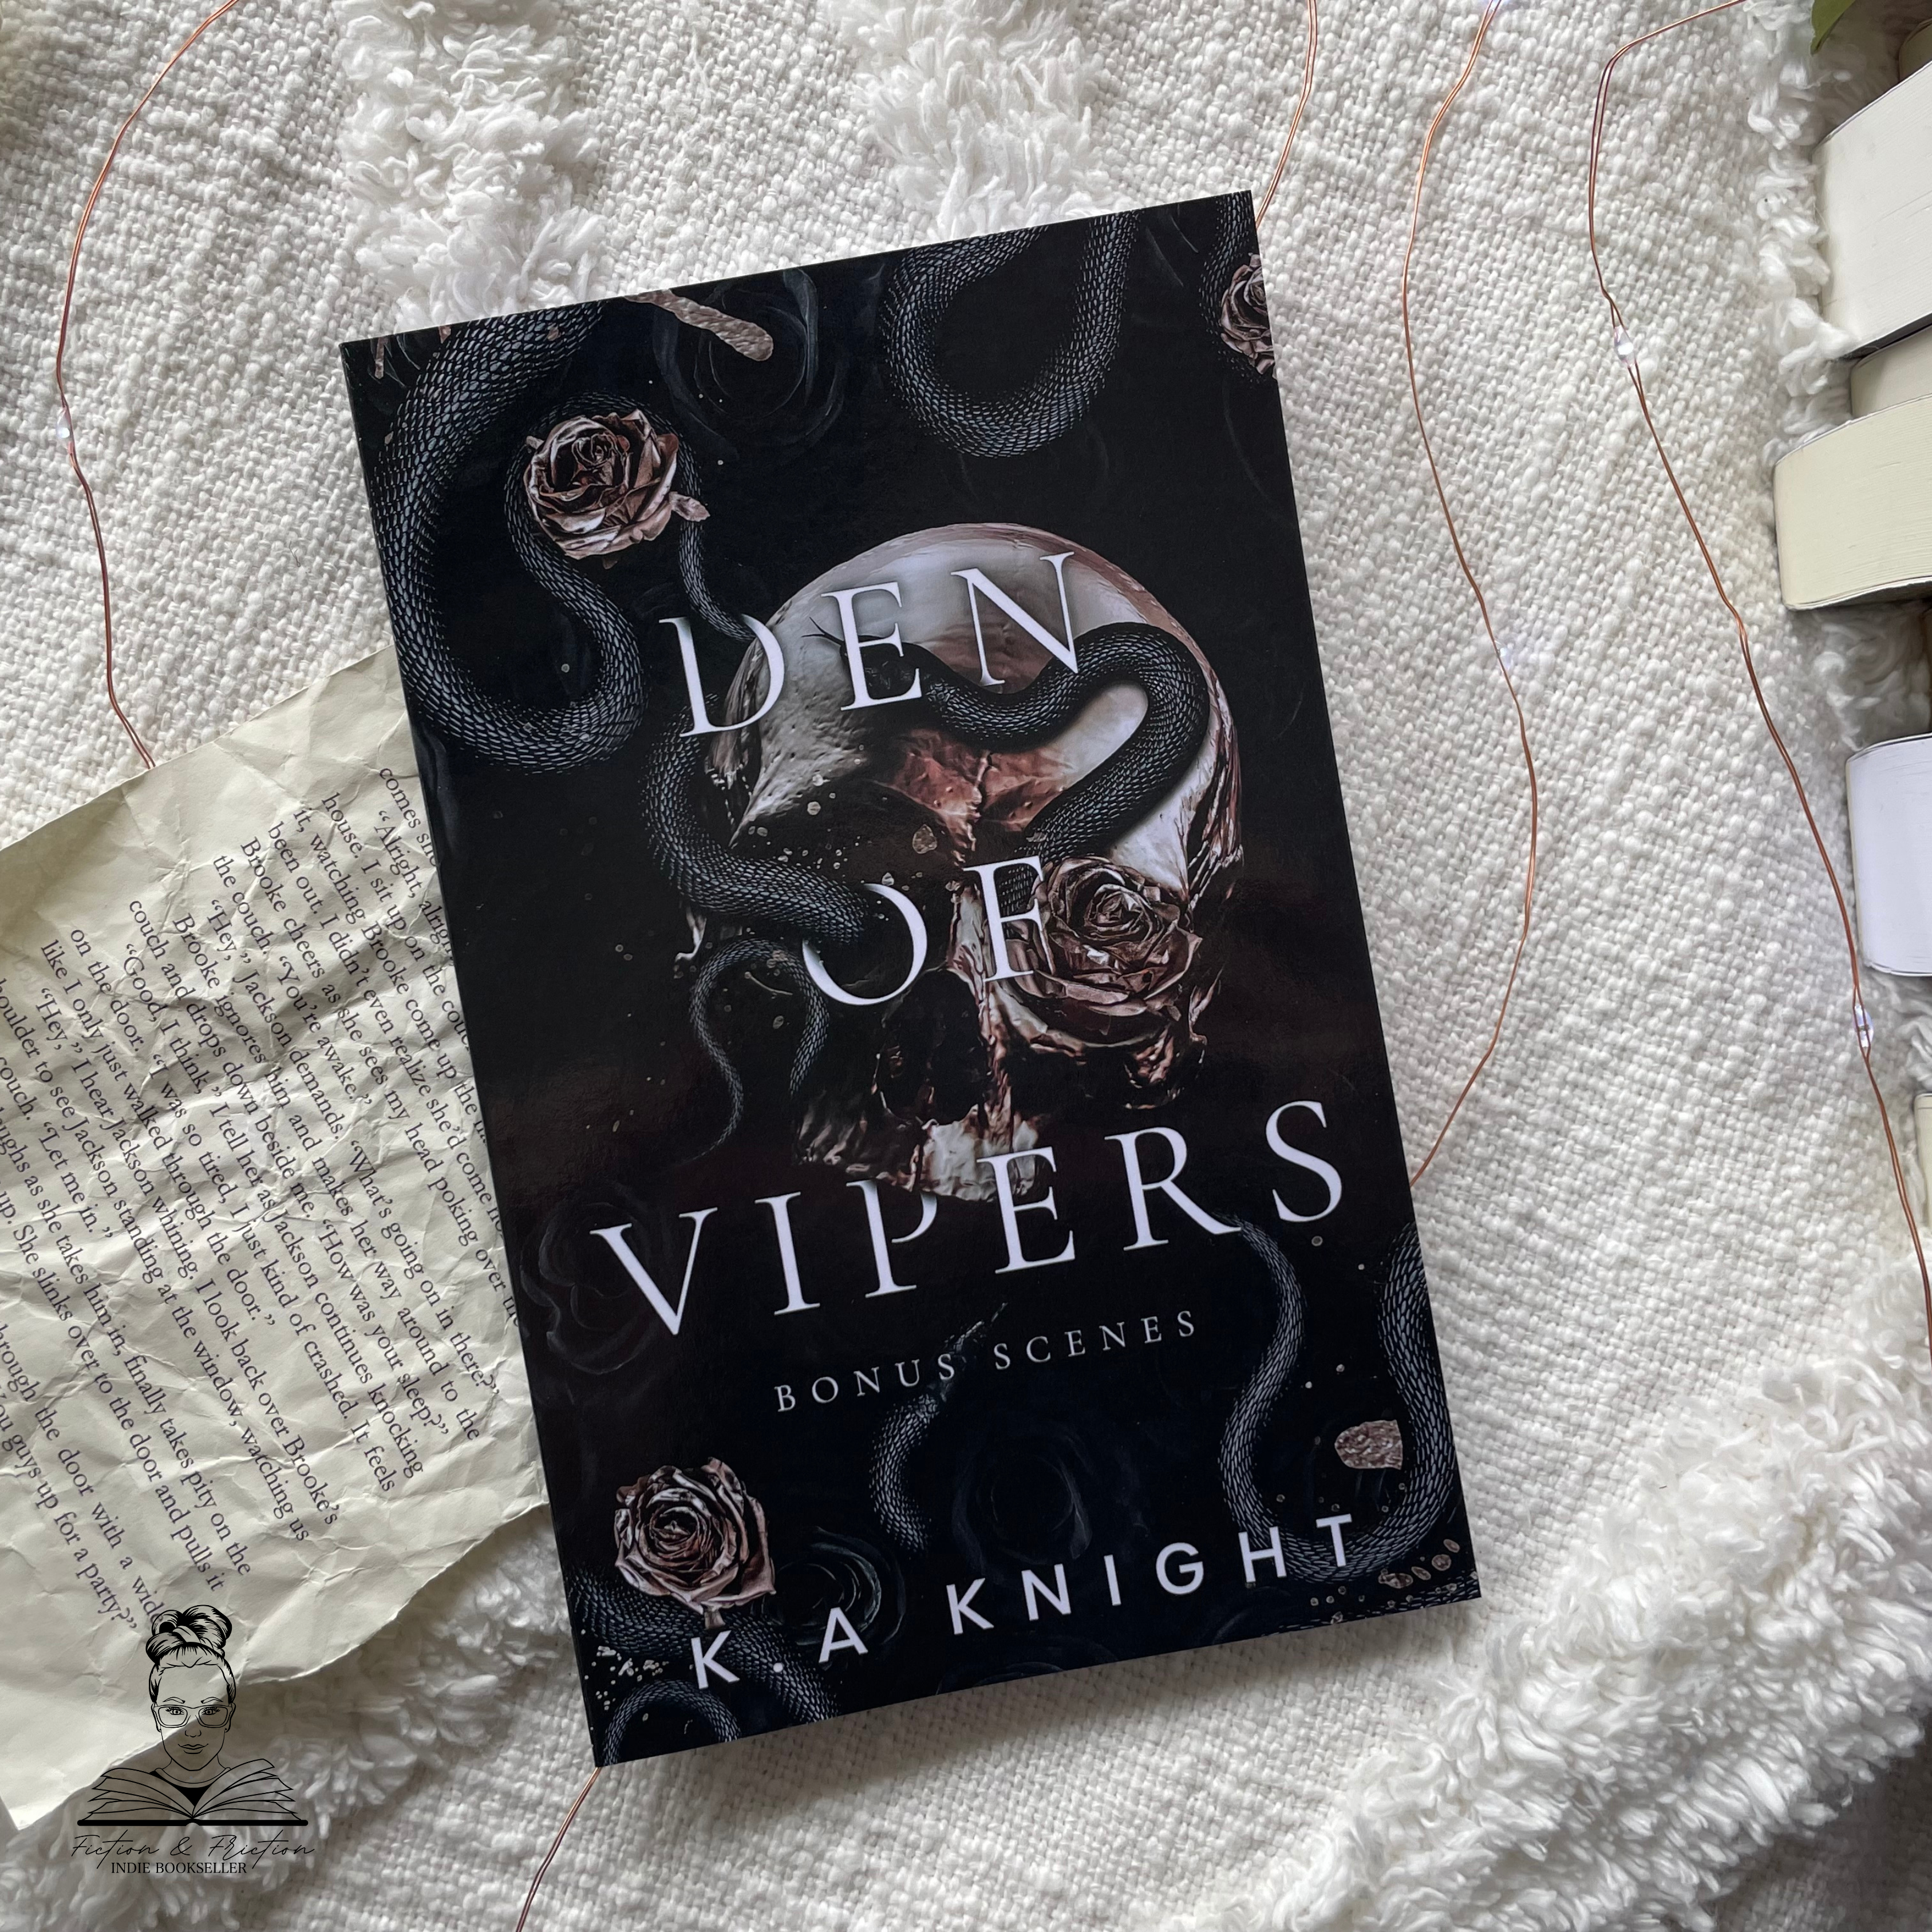 Den of Vipers: Bonus Scene by K.A. Knight